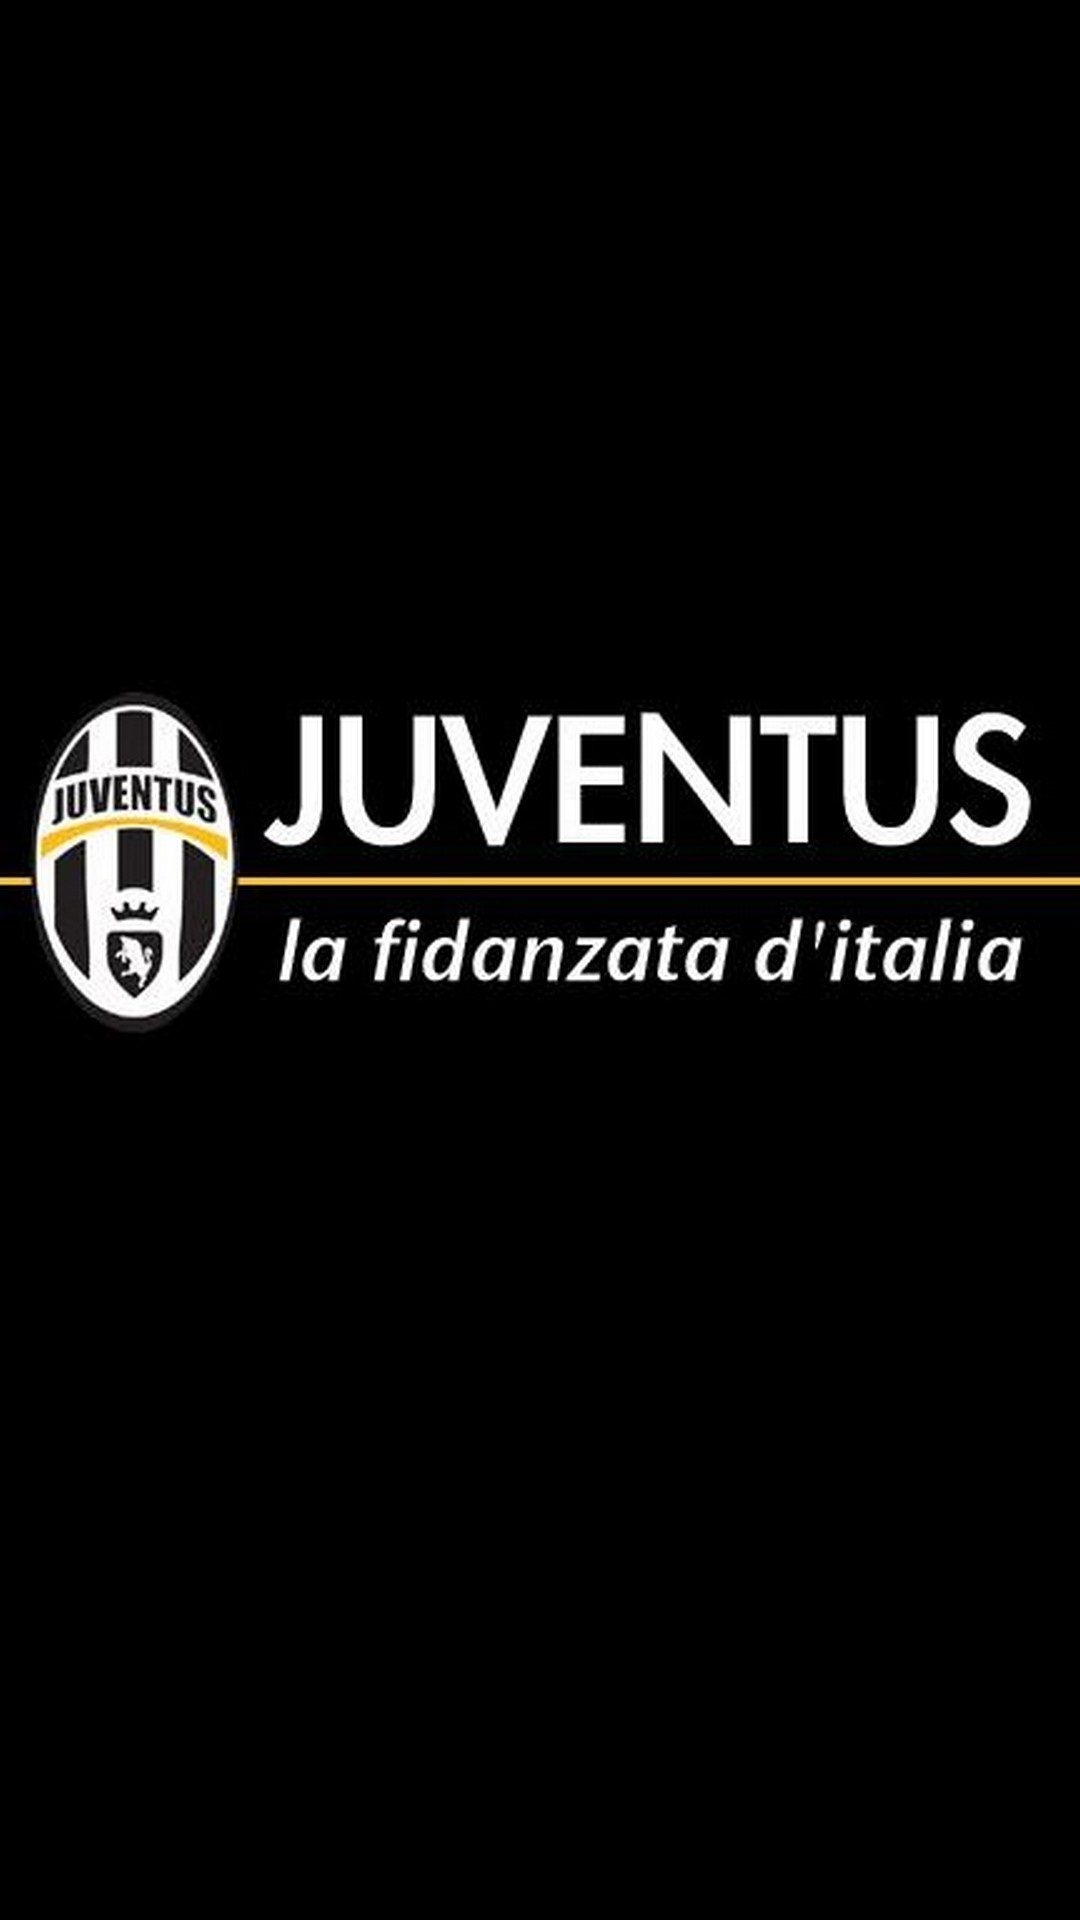 Juventus Wallpaper For iOS resolution 1080x1920